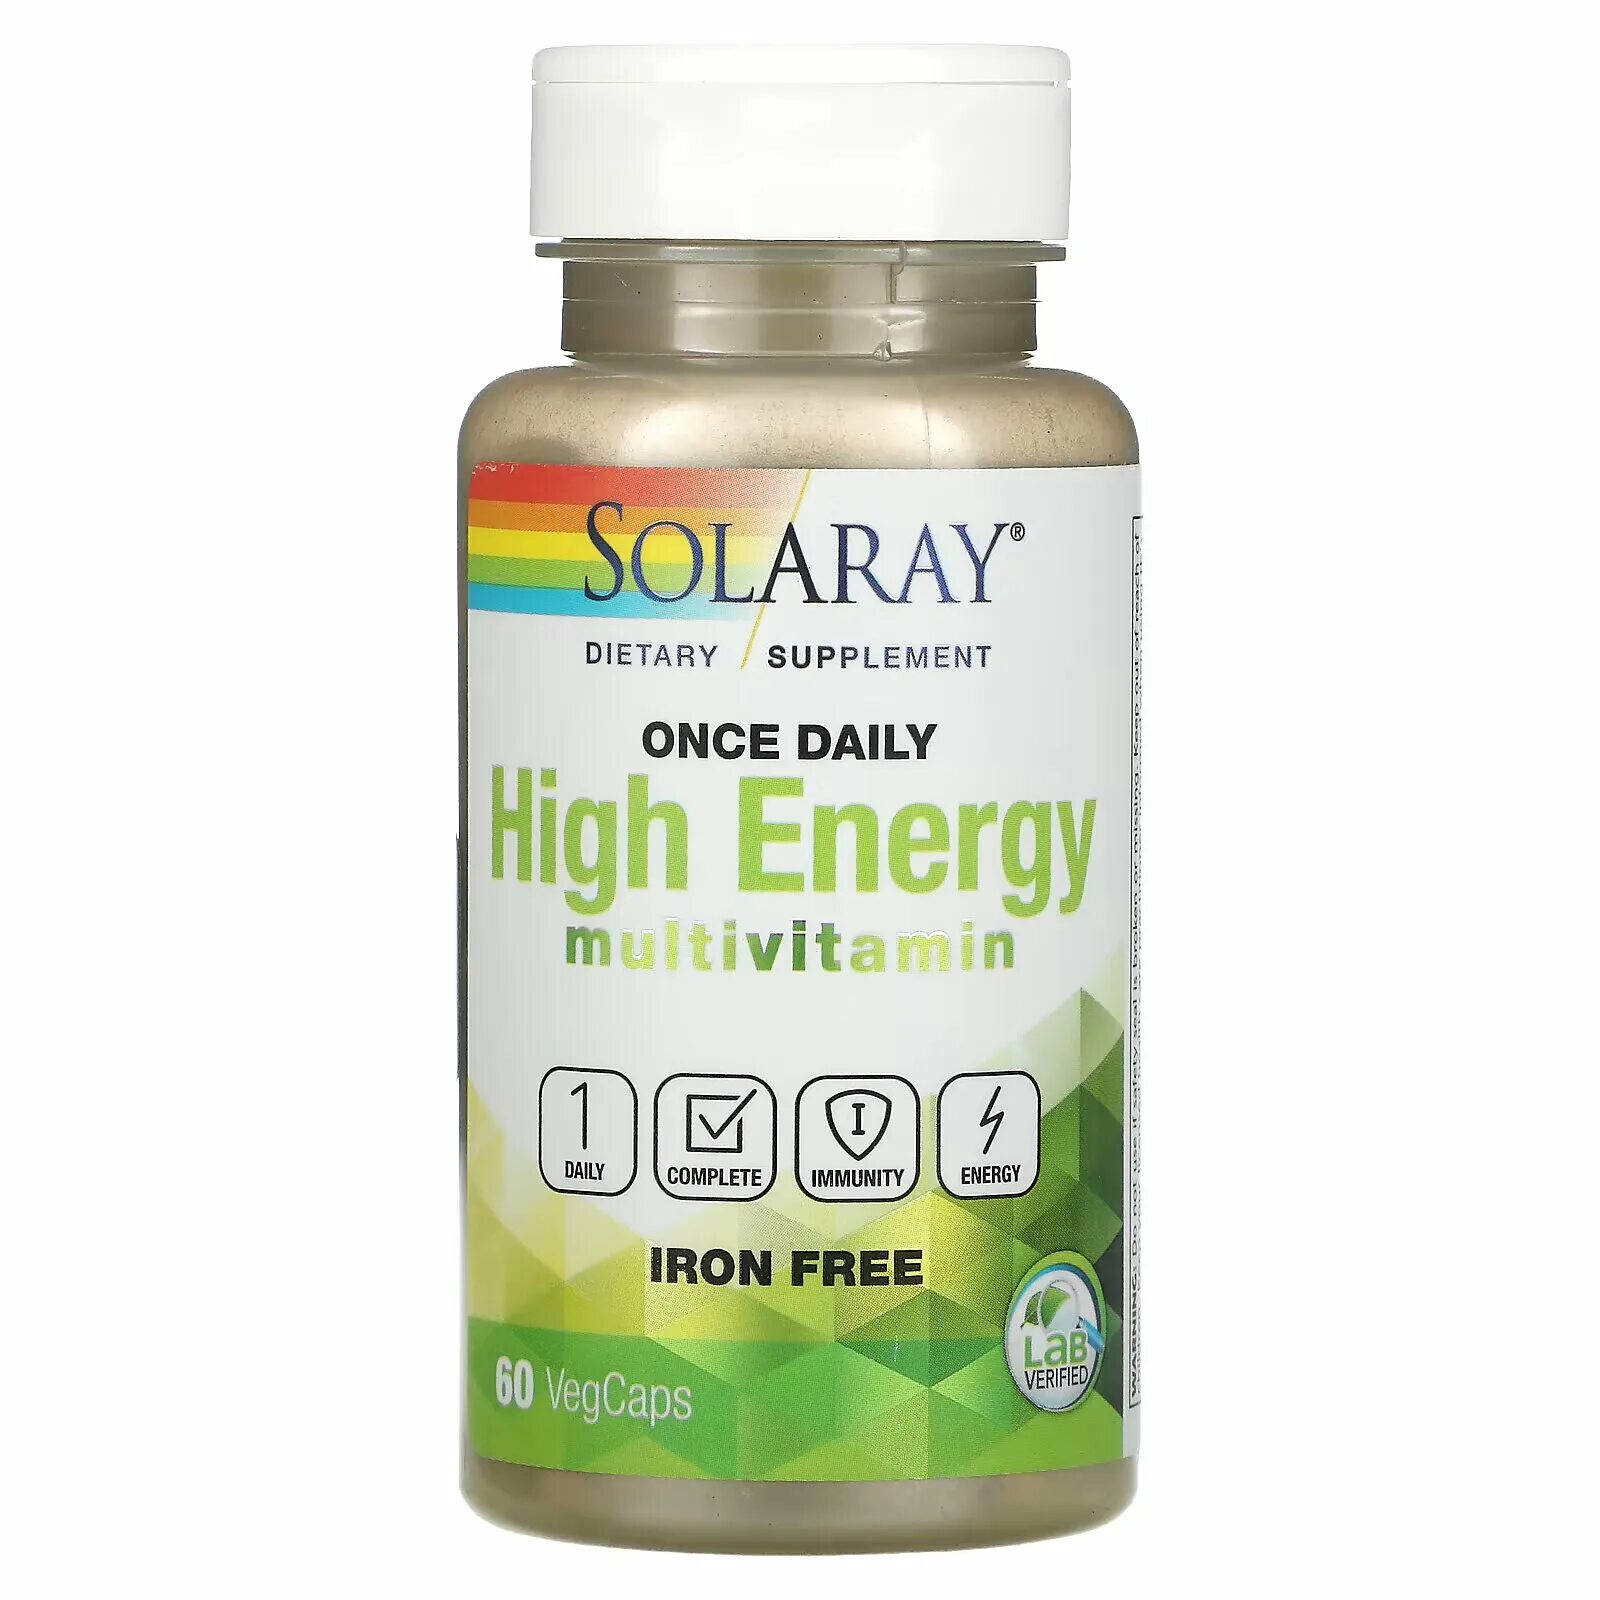 Solaray once Daily Active man Multi-Vitamin. Solaray immufight. Immufight Daily Defense. Once daily